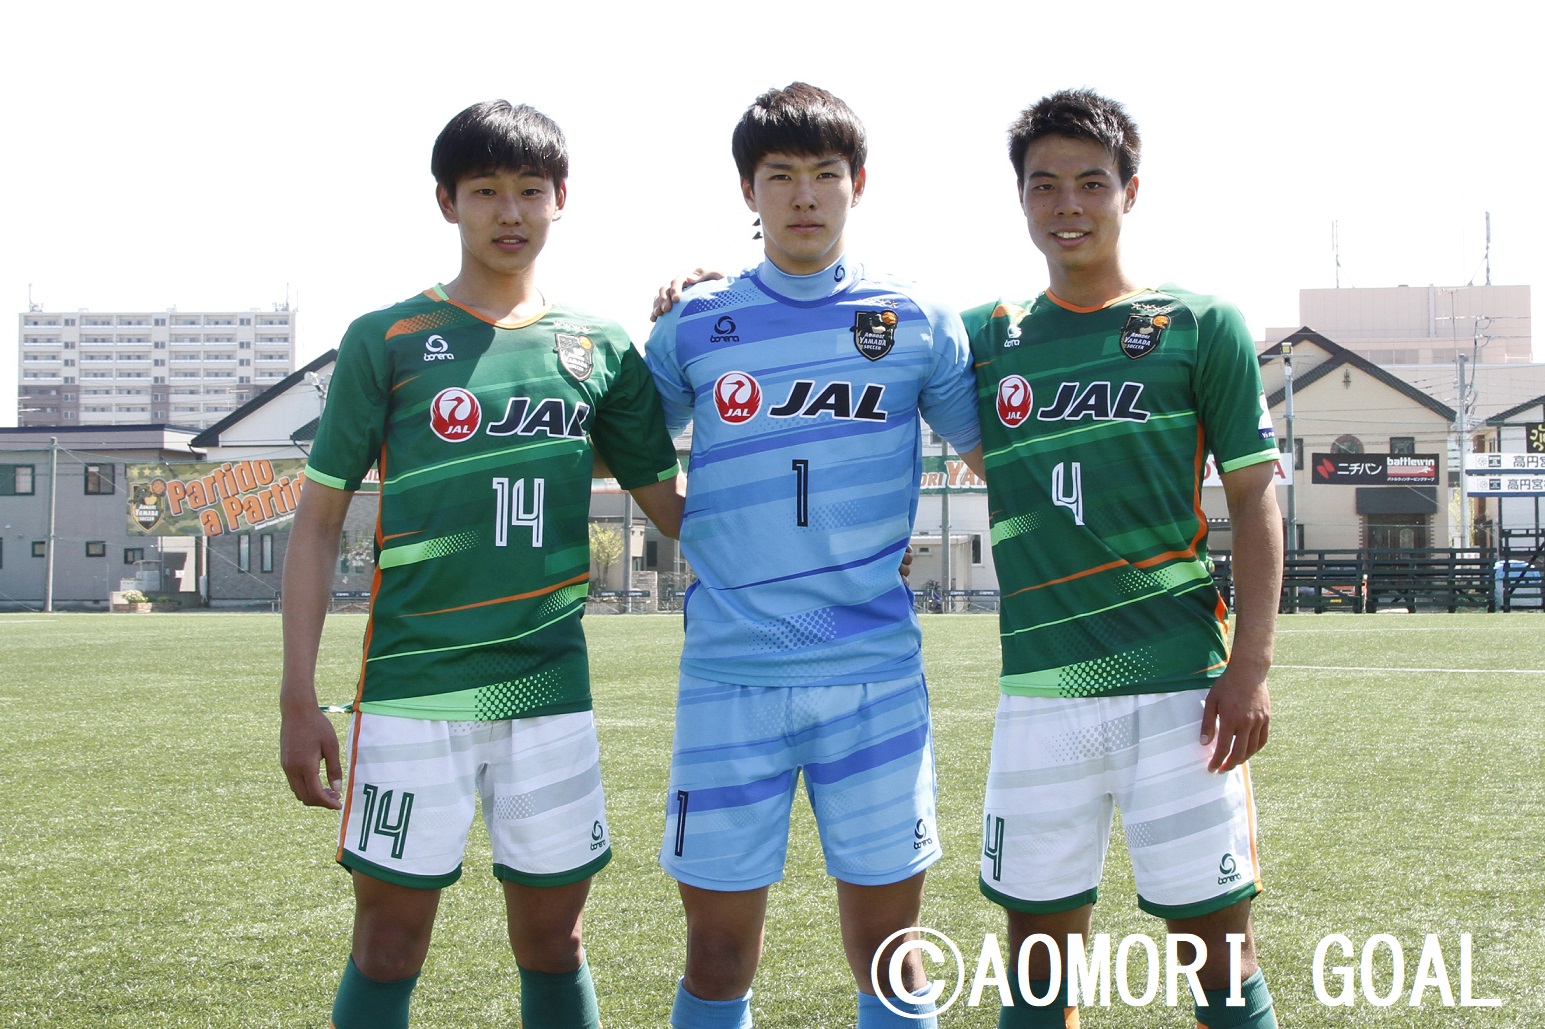 News Topics News Topics 青森ゴール Aomori Goal 青森県サッカー フットサルマガジン